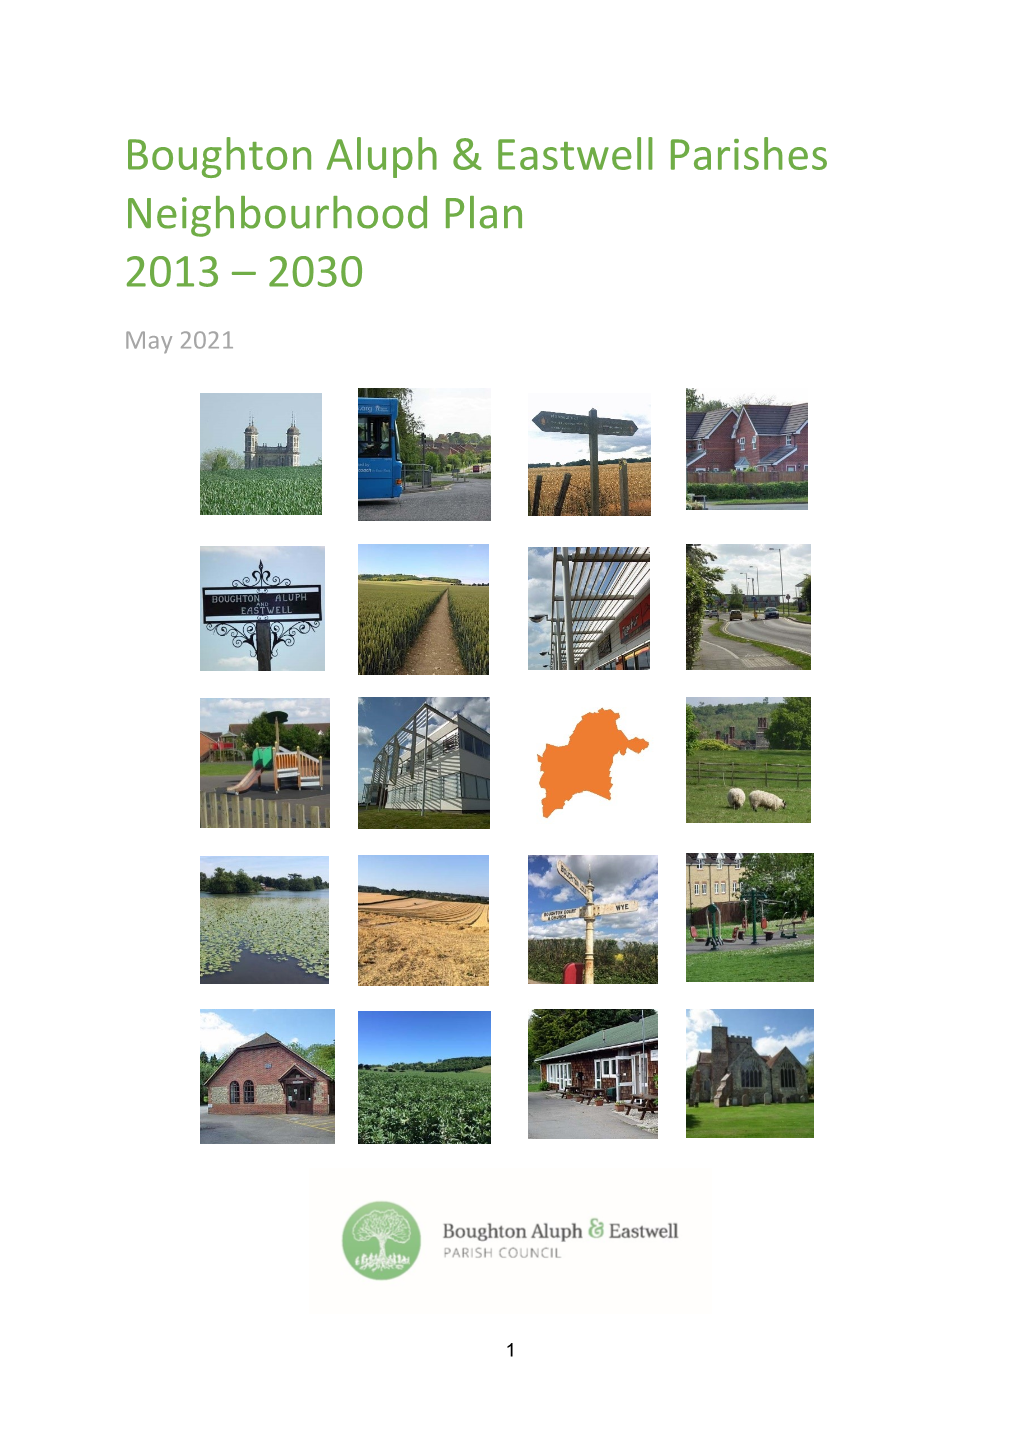 Boughton Aluph & Eastwell Parishes Neighbourhood Plan 2013-2030